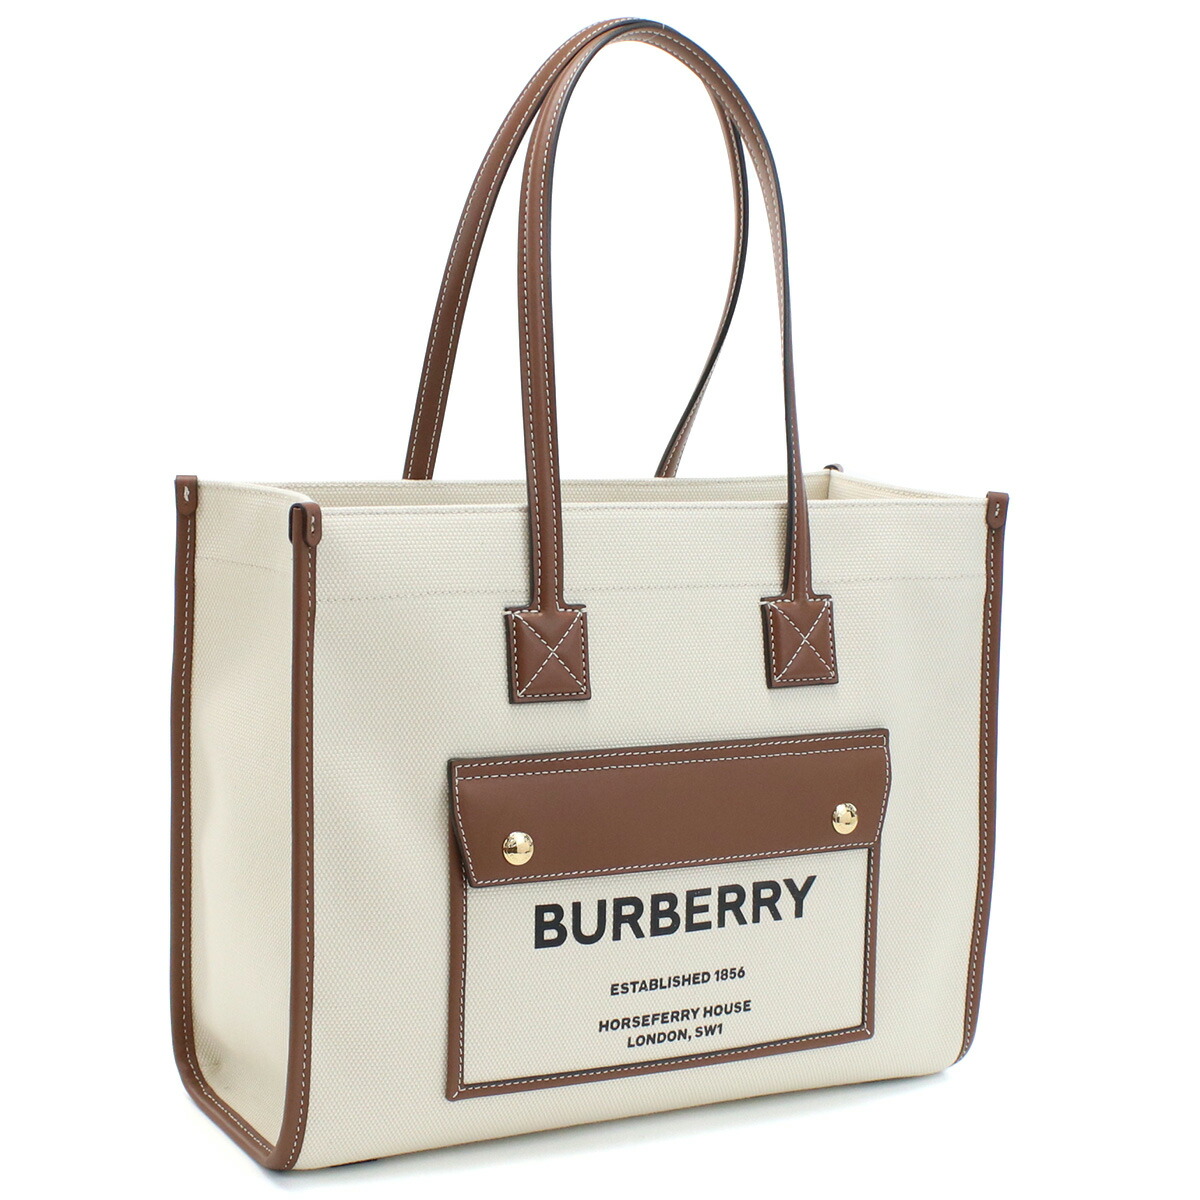 Armerie Boutique バーバリー BURBERRY トートバッグ ブランド 通勤 通学 8044138 A1395  NATURAL-TAN ホワイト系 ブラウン系 bag-01 24_sum